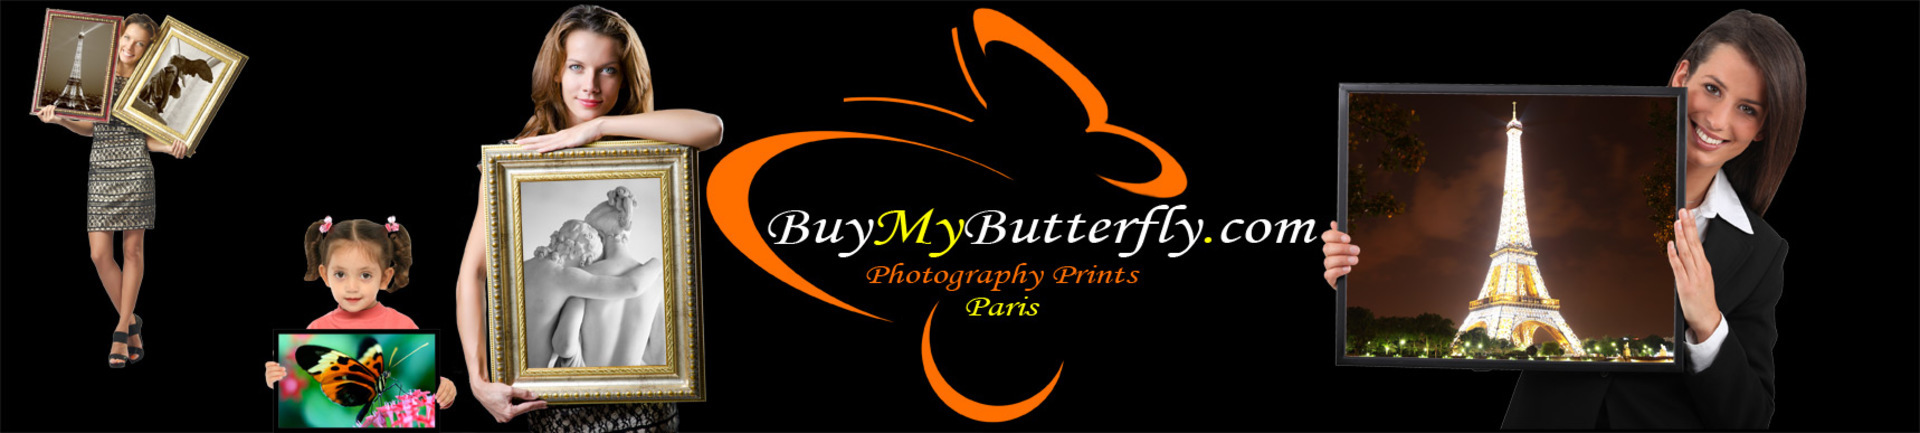 BuyMyButerfly.com Free Photography